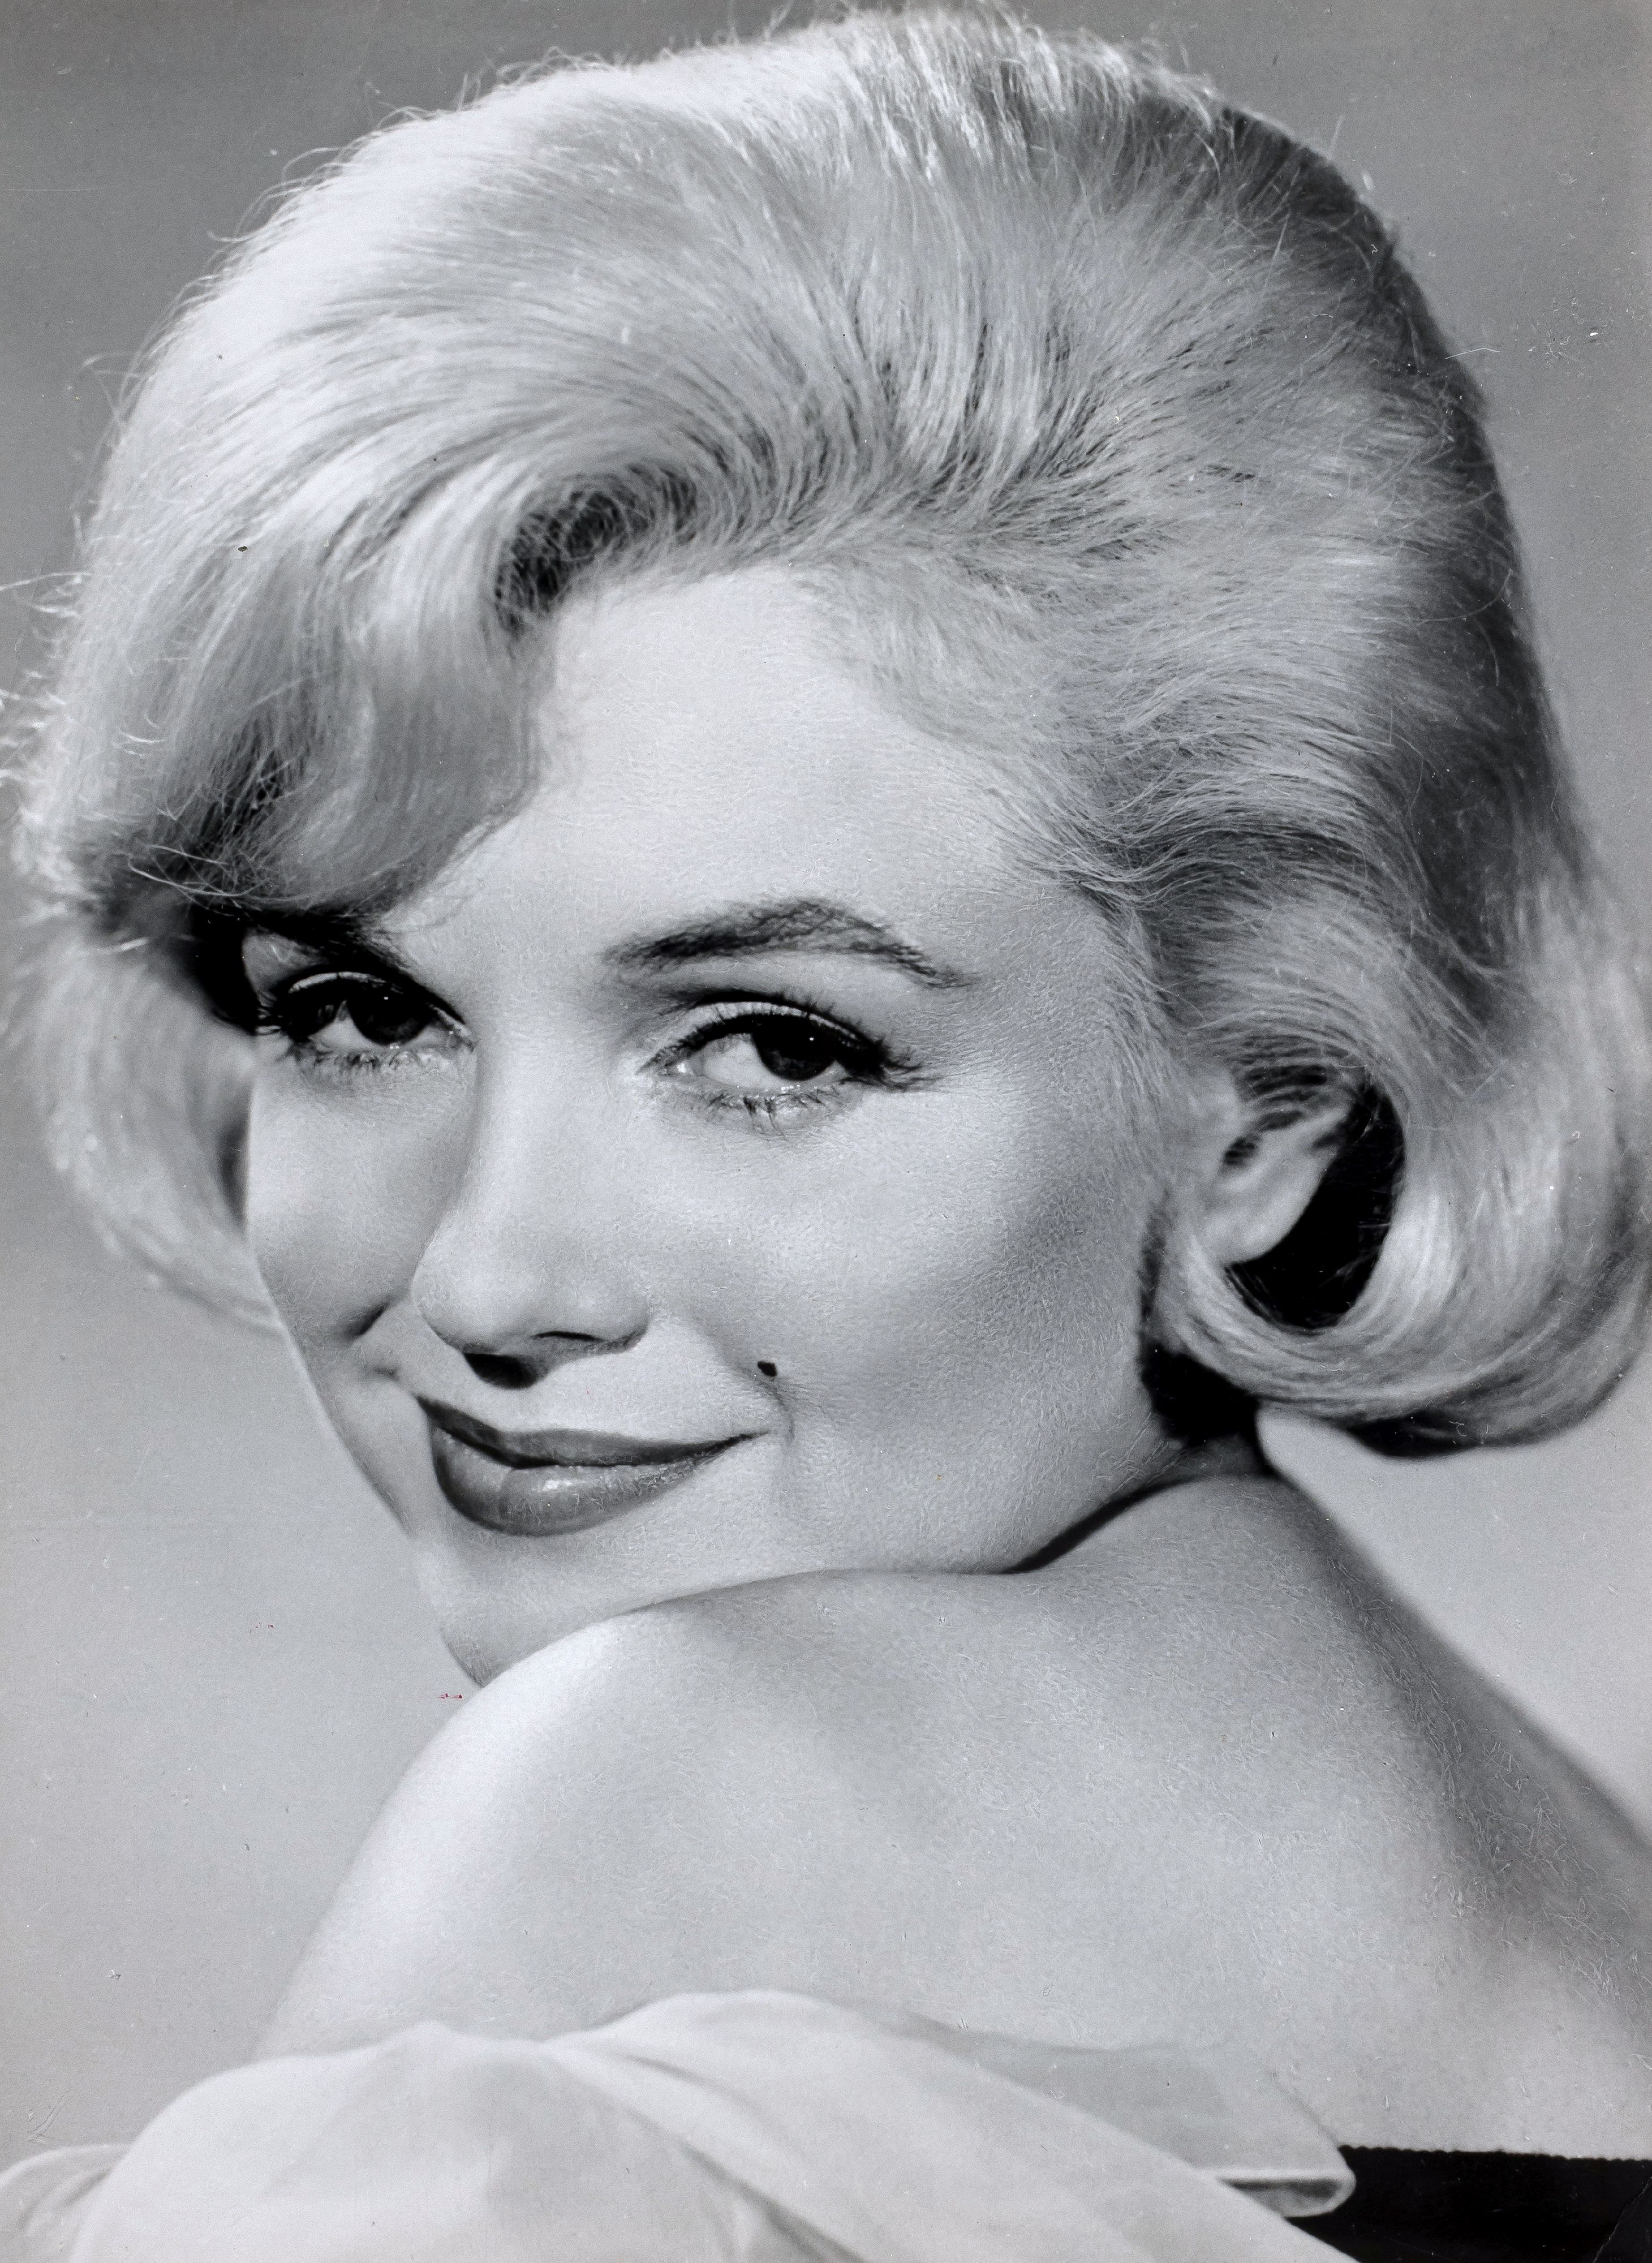 FOTOGRAFIE | 7 Pressefotos von Marilyn Monroe und 1 Notenblatt "Some Like It Hot" - Image 4 of 9